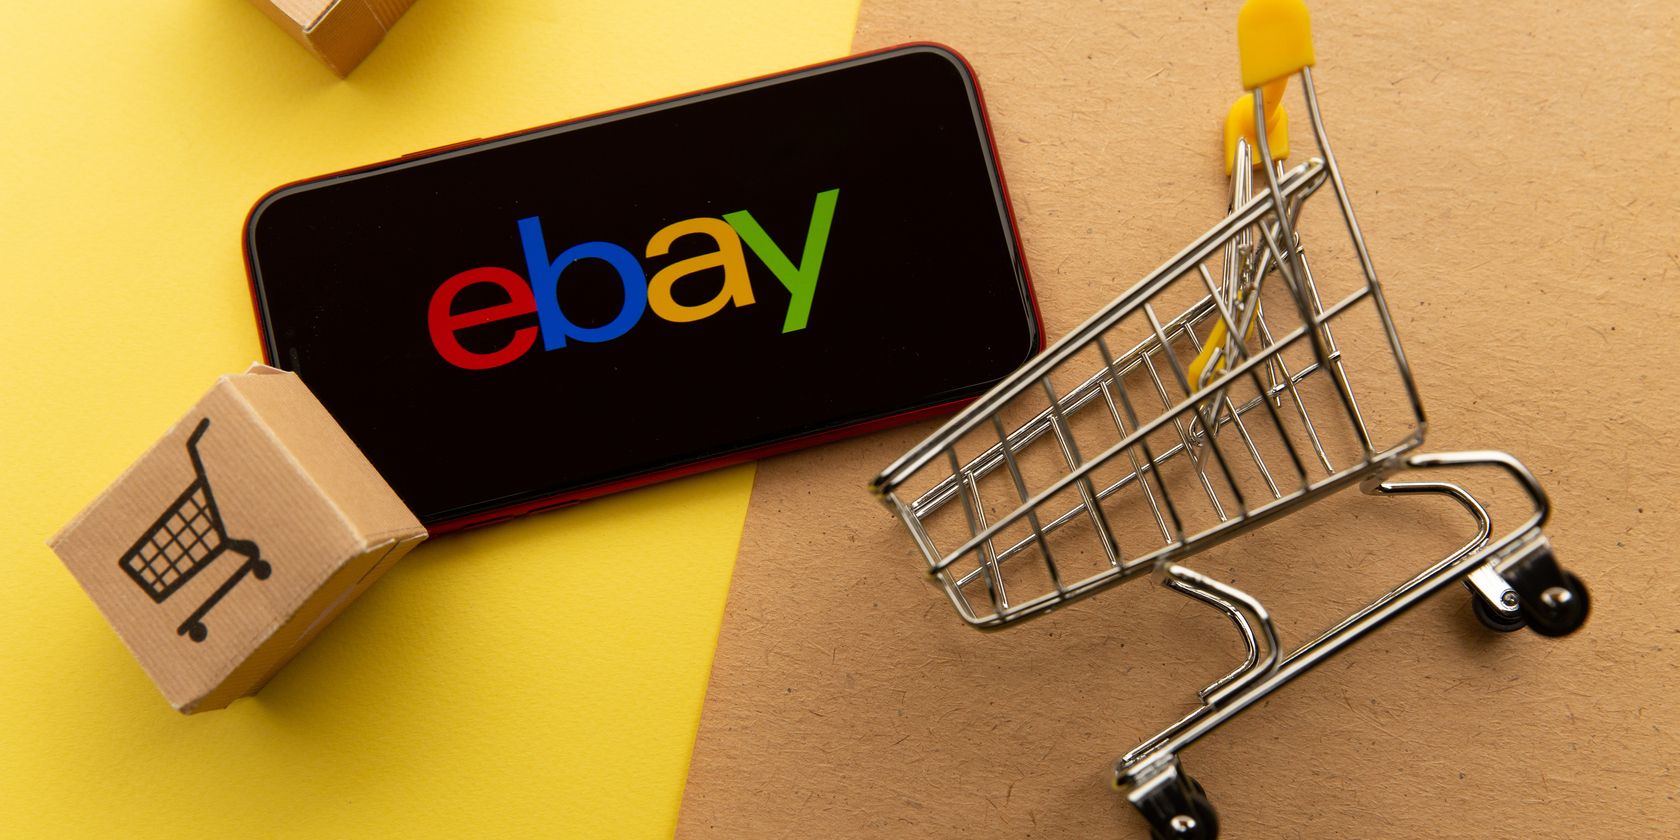 ebay-logo-on-phone-next-to-shopping-cart